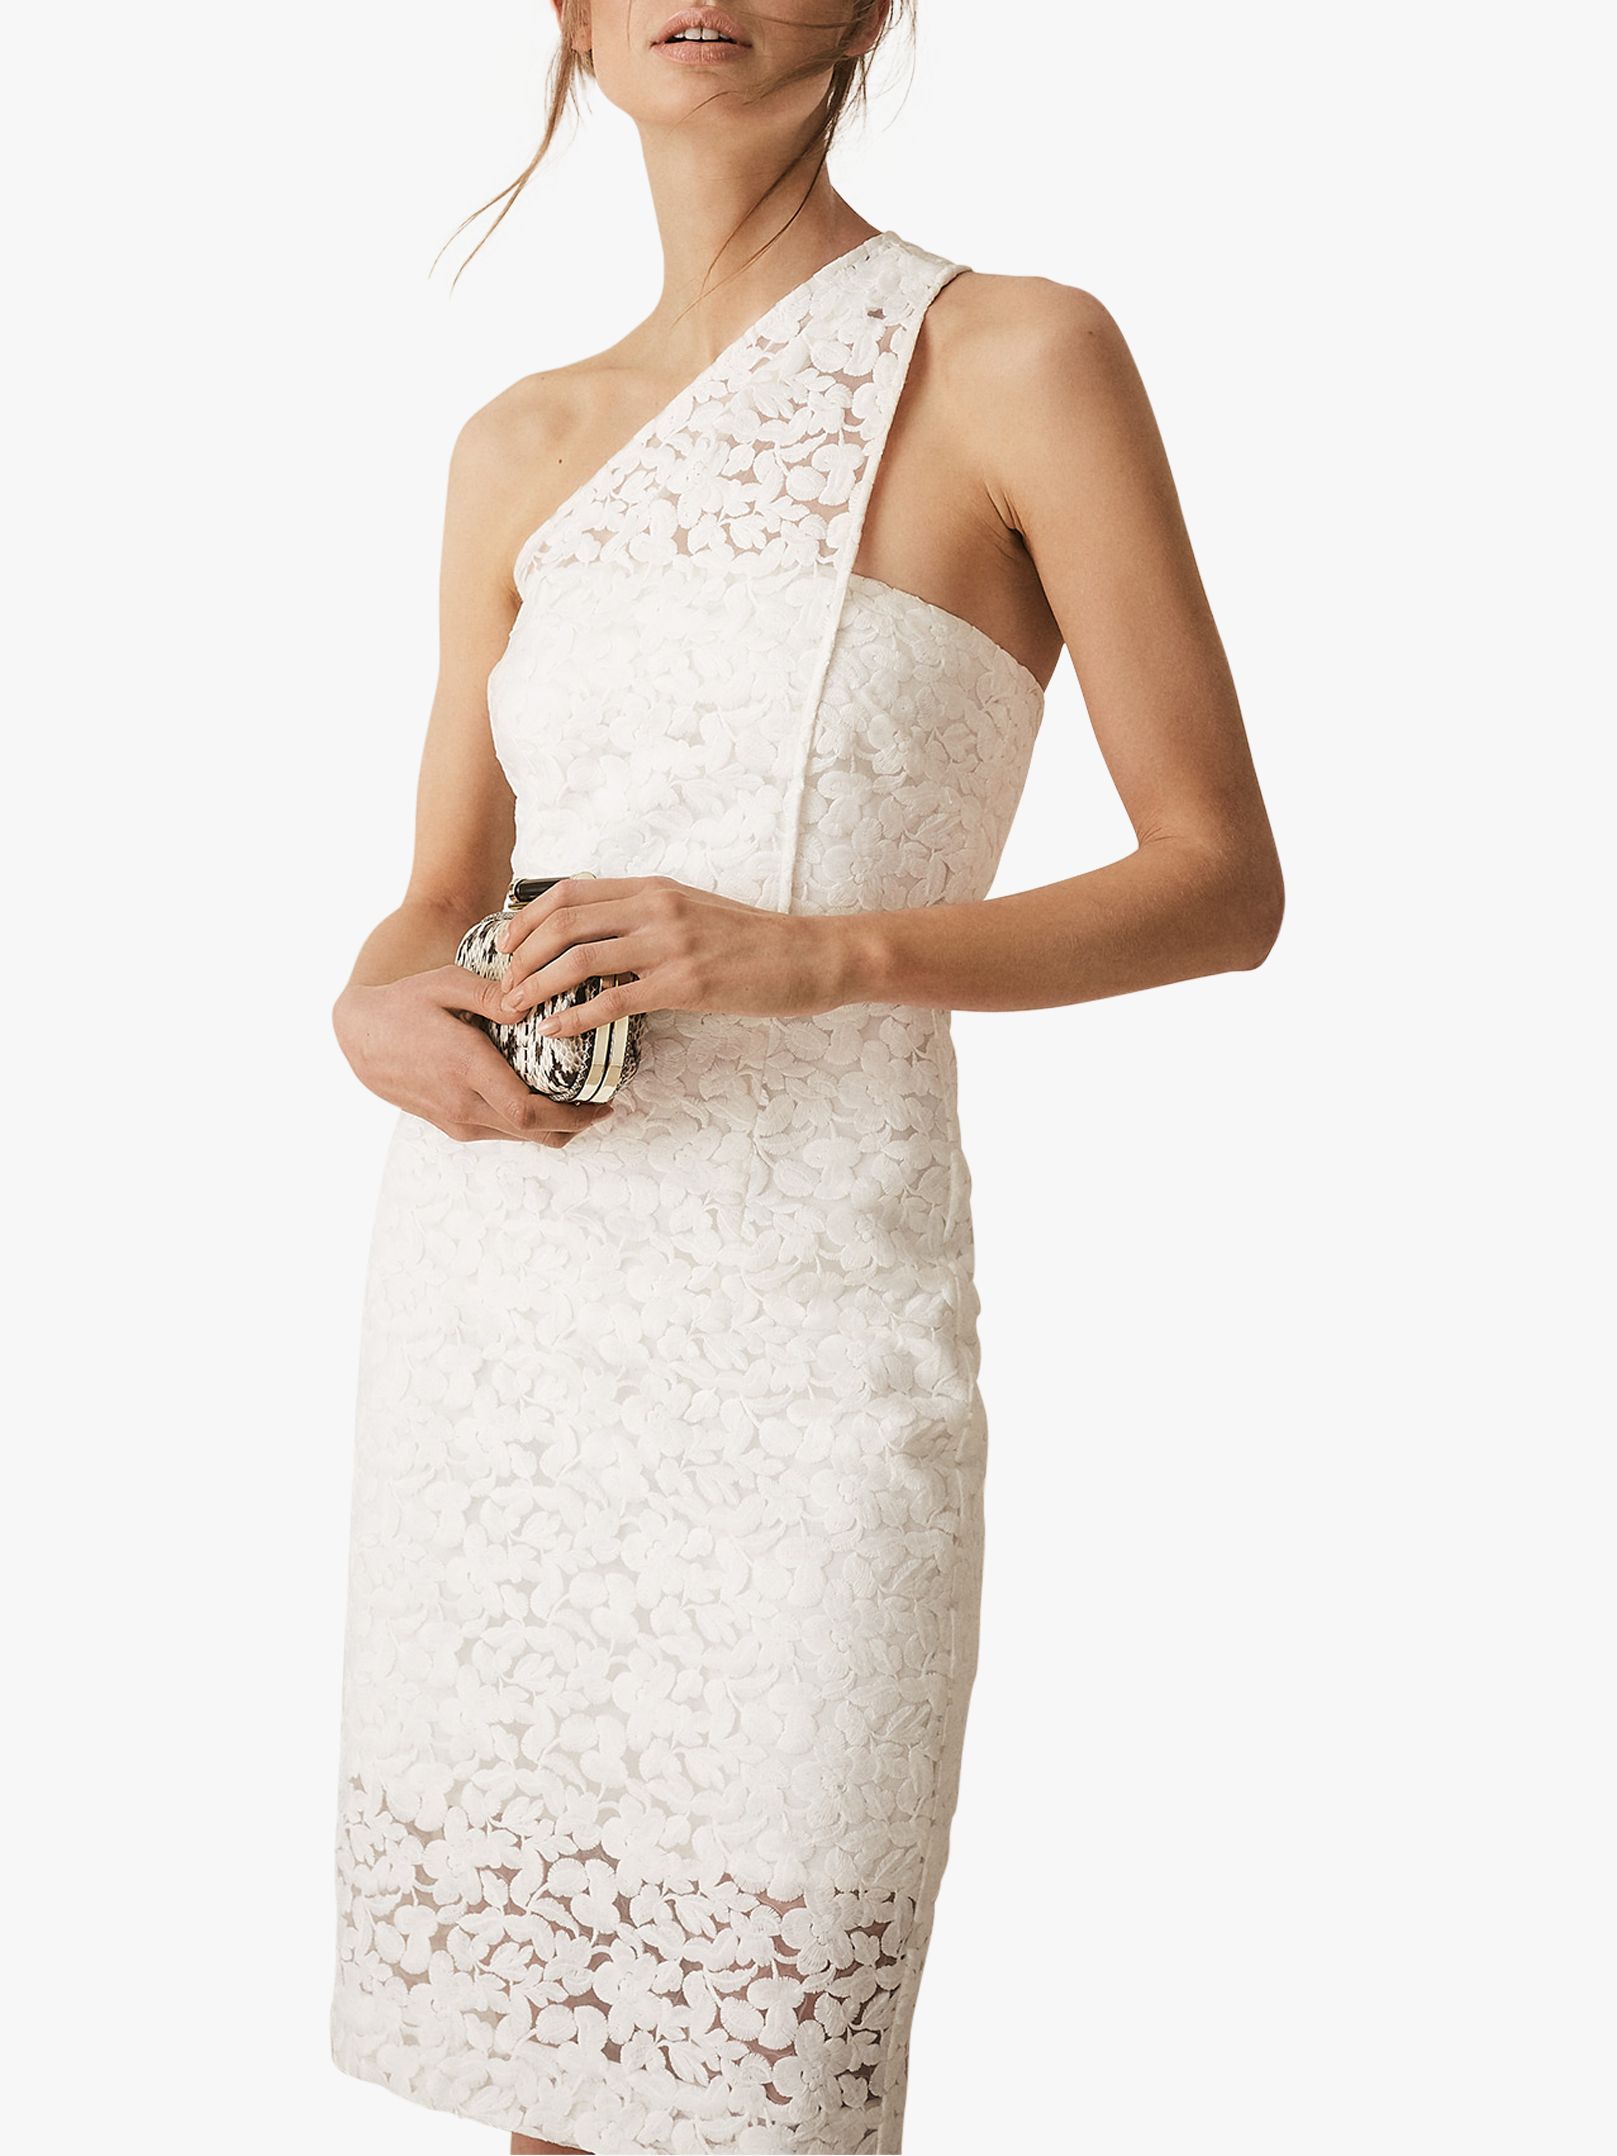 reiss white lace dress